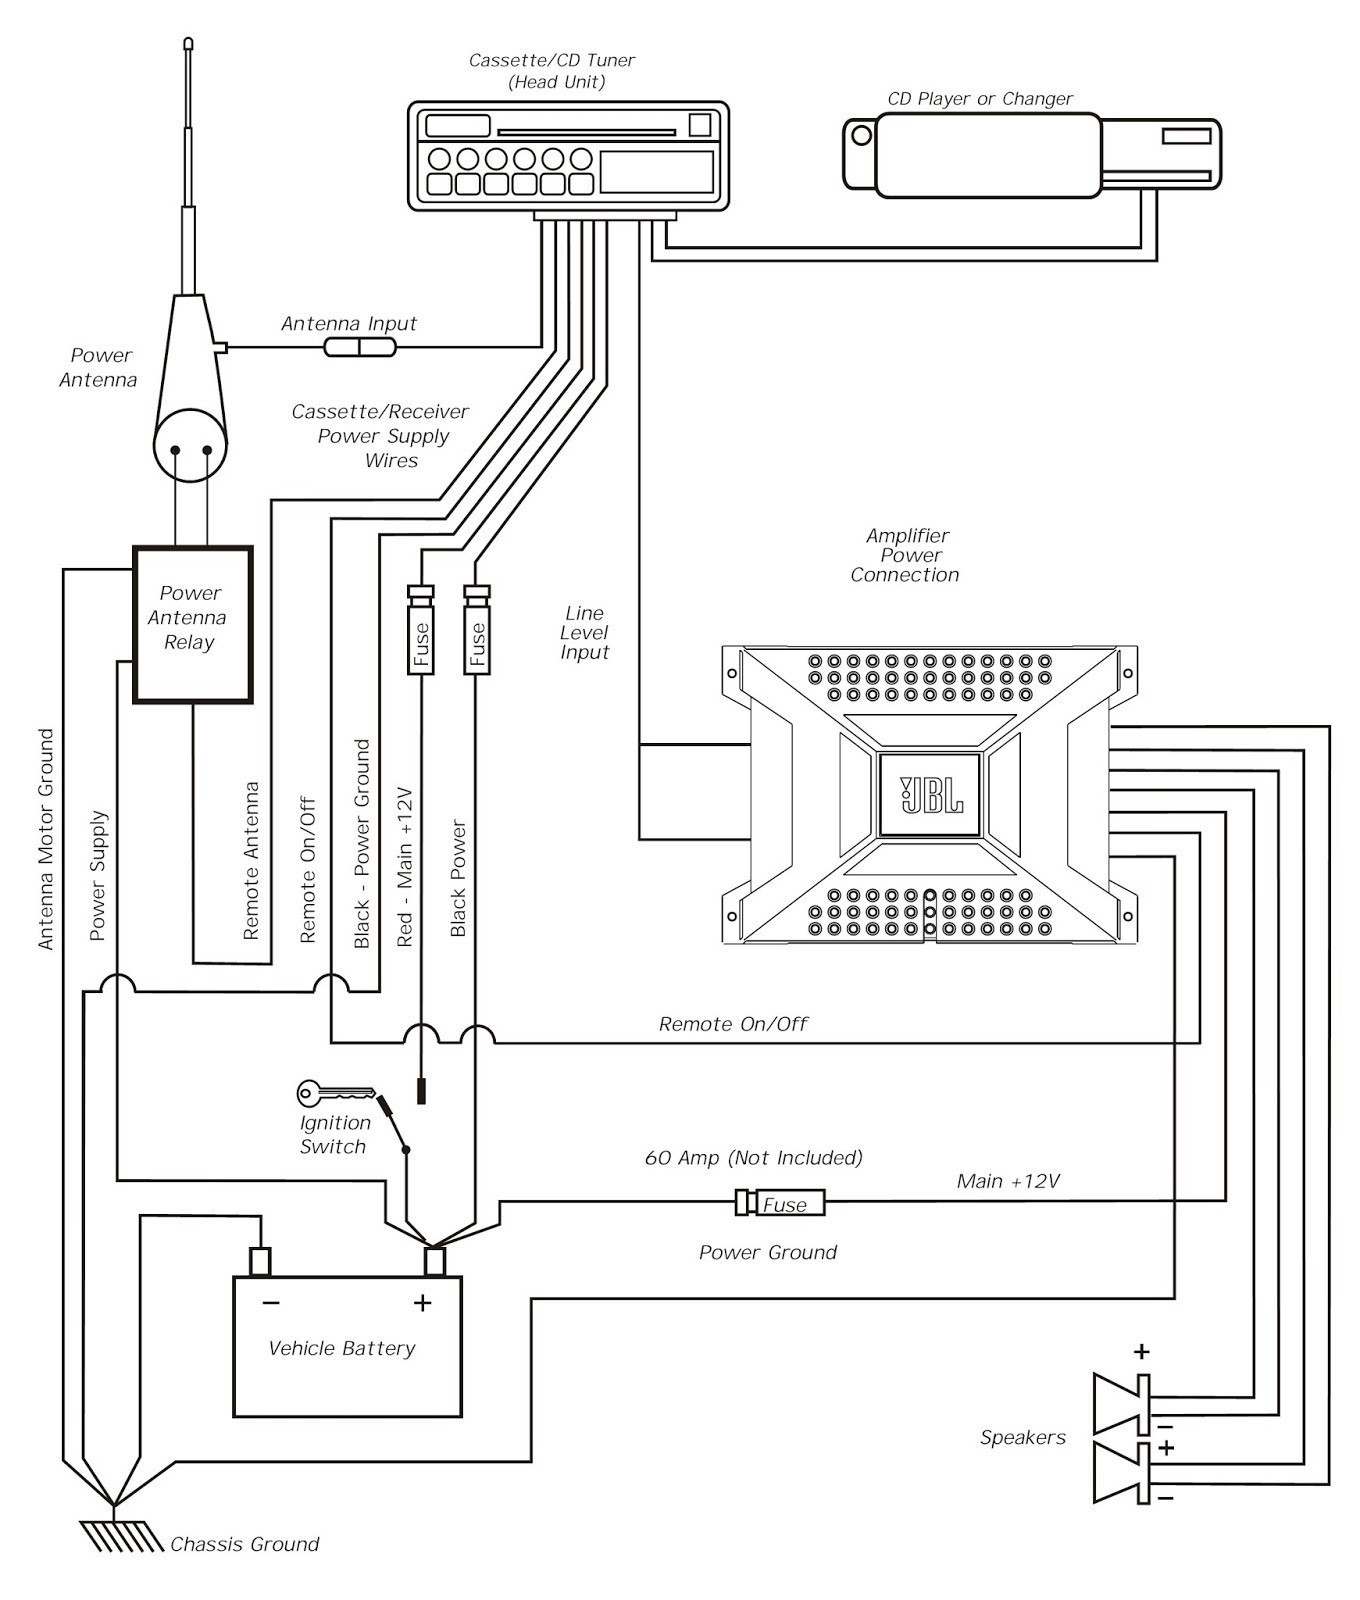 5 Channel Amp Wiring Diagram Lifier Wiring Diagram Car Amplifier Wiring Diagram Installation Of 5 Channel Amp Wiring Diagram